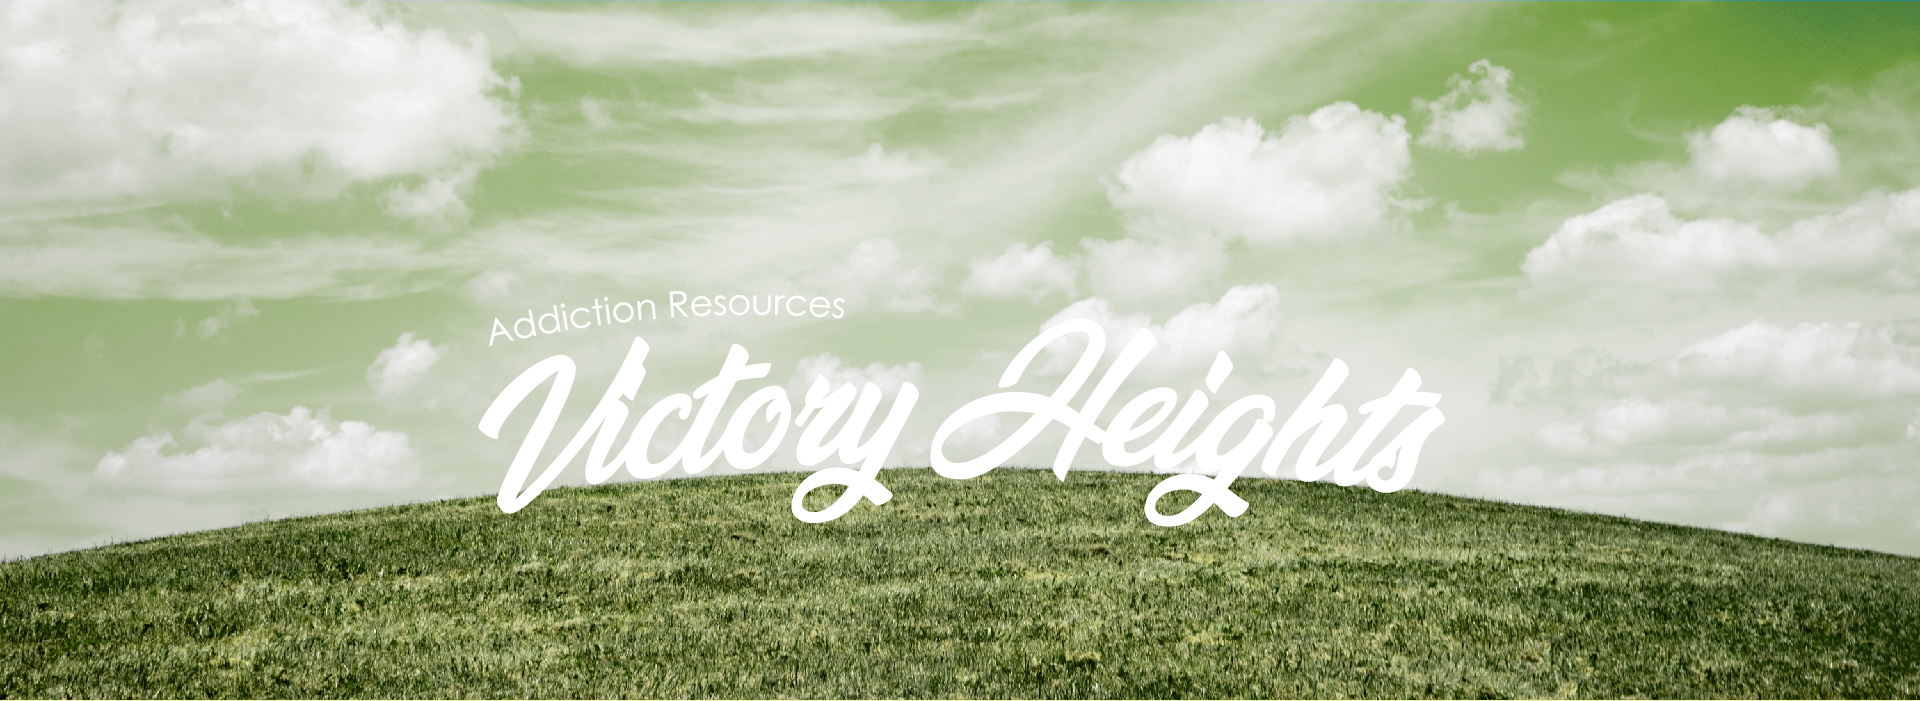 Victory Heights, Washington Addiction Resources